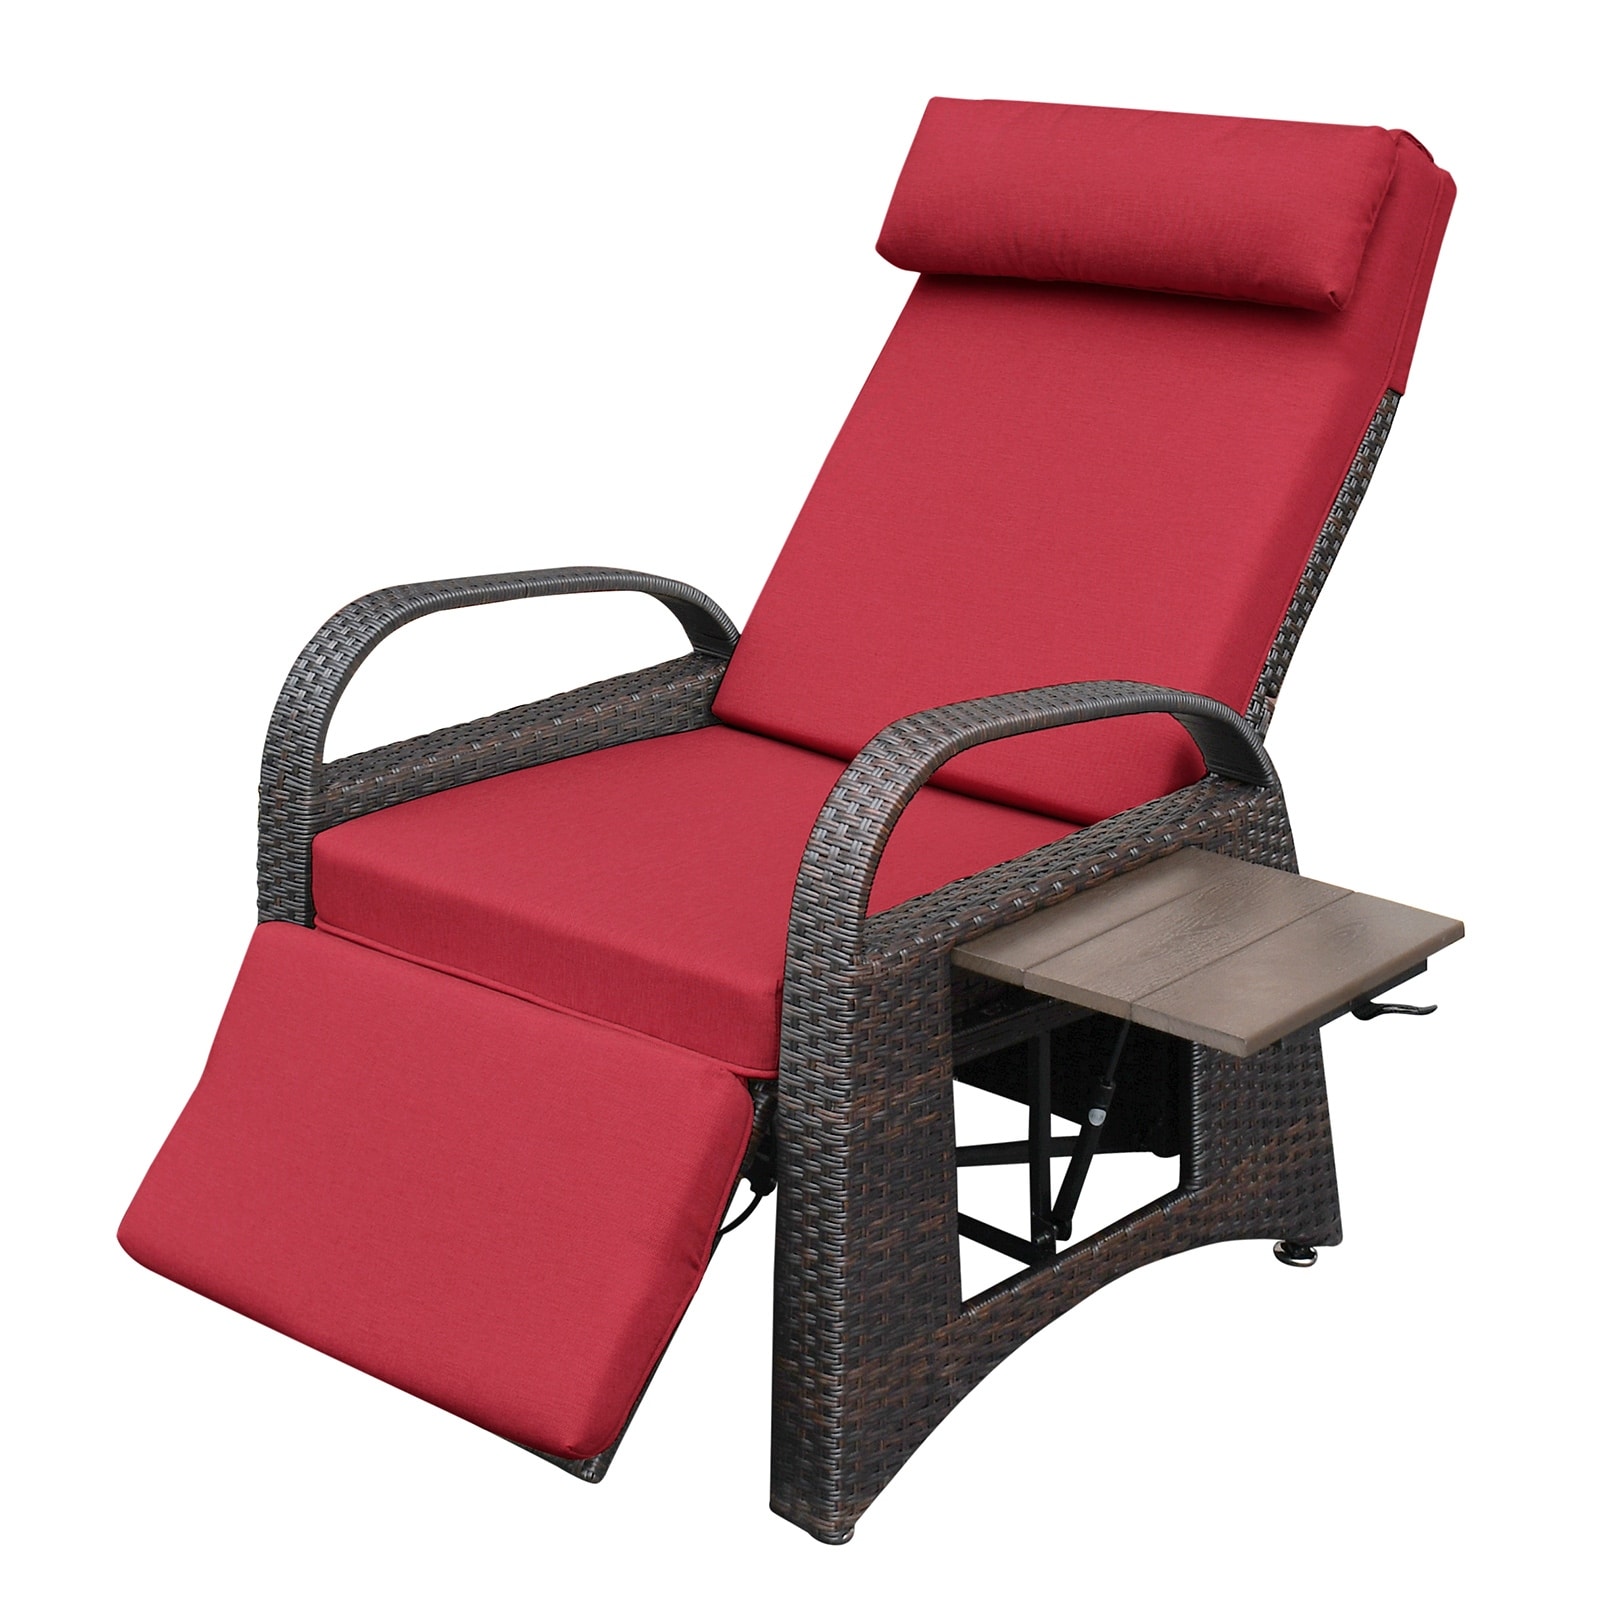 Outdoor Wicker Adjustable Back Recliner Chair Ergonomic Removable Soft Cushion Sunbathing Chair Modern Armchair Recliner Chair